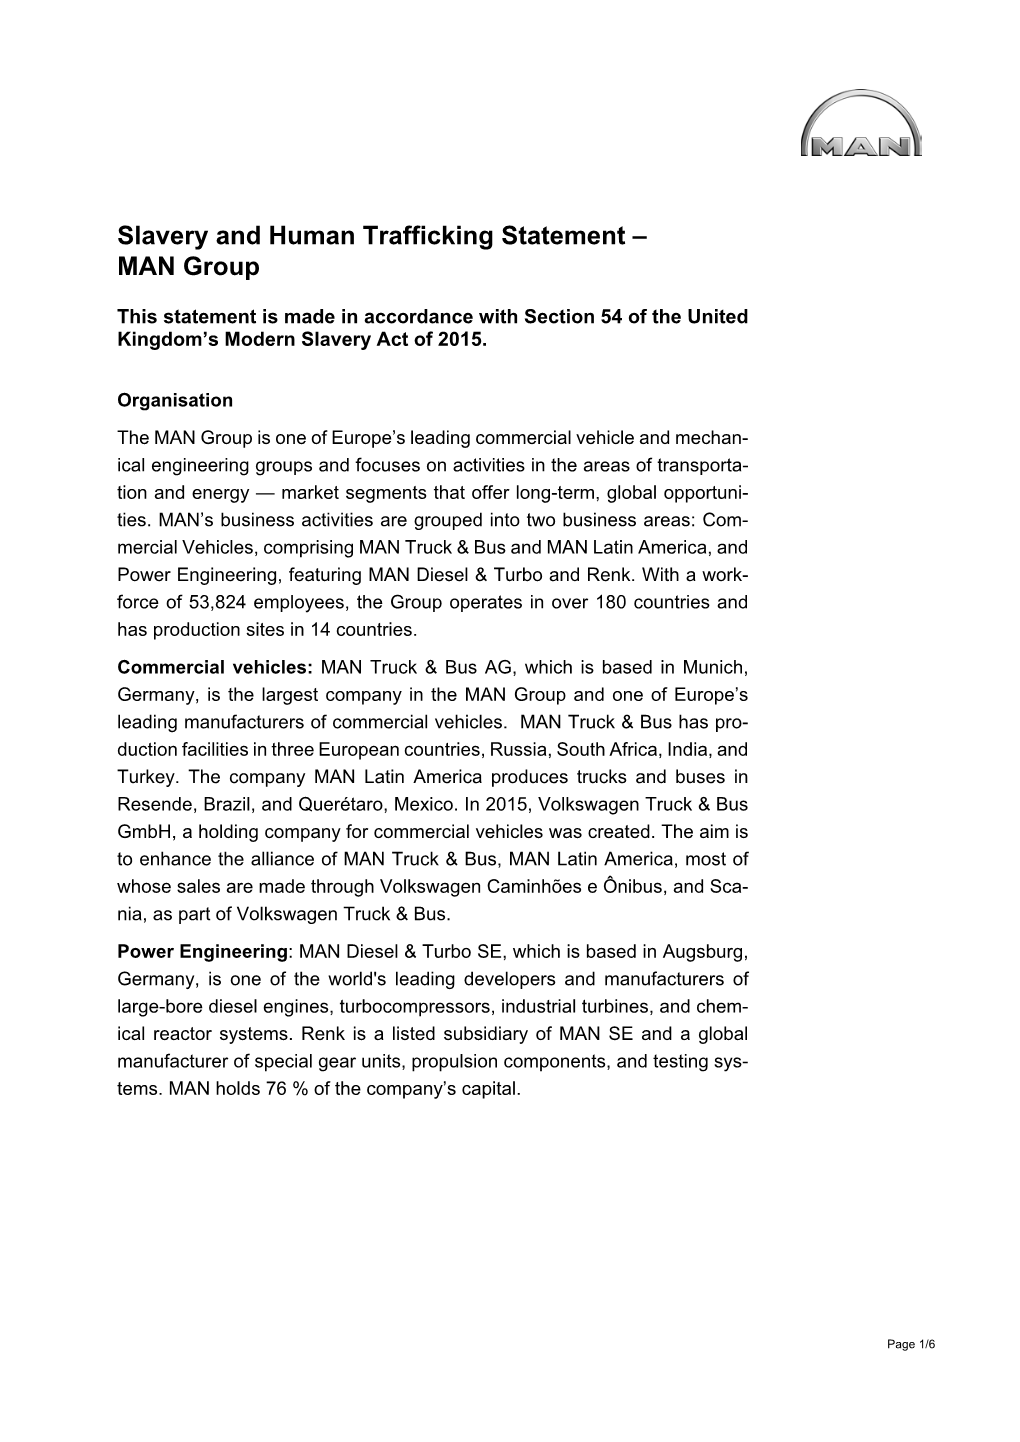 Slavery and Human Trafficking Statement – MAN Group